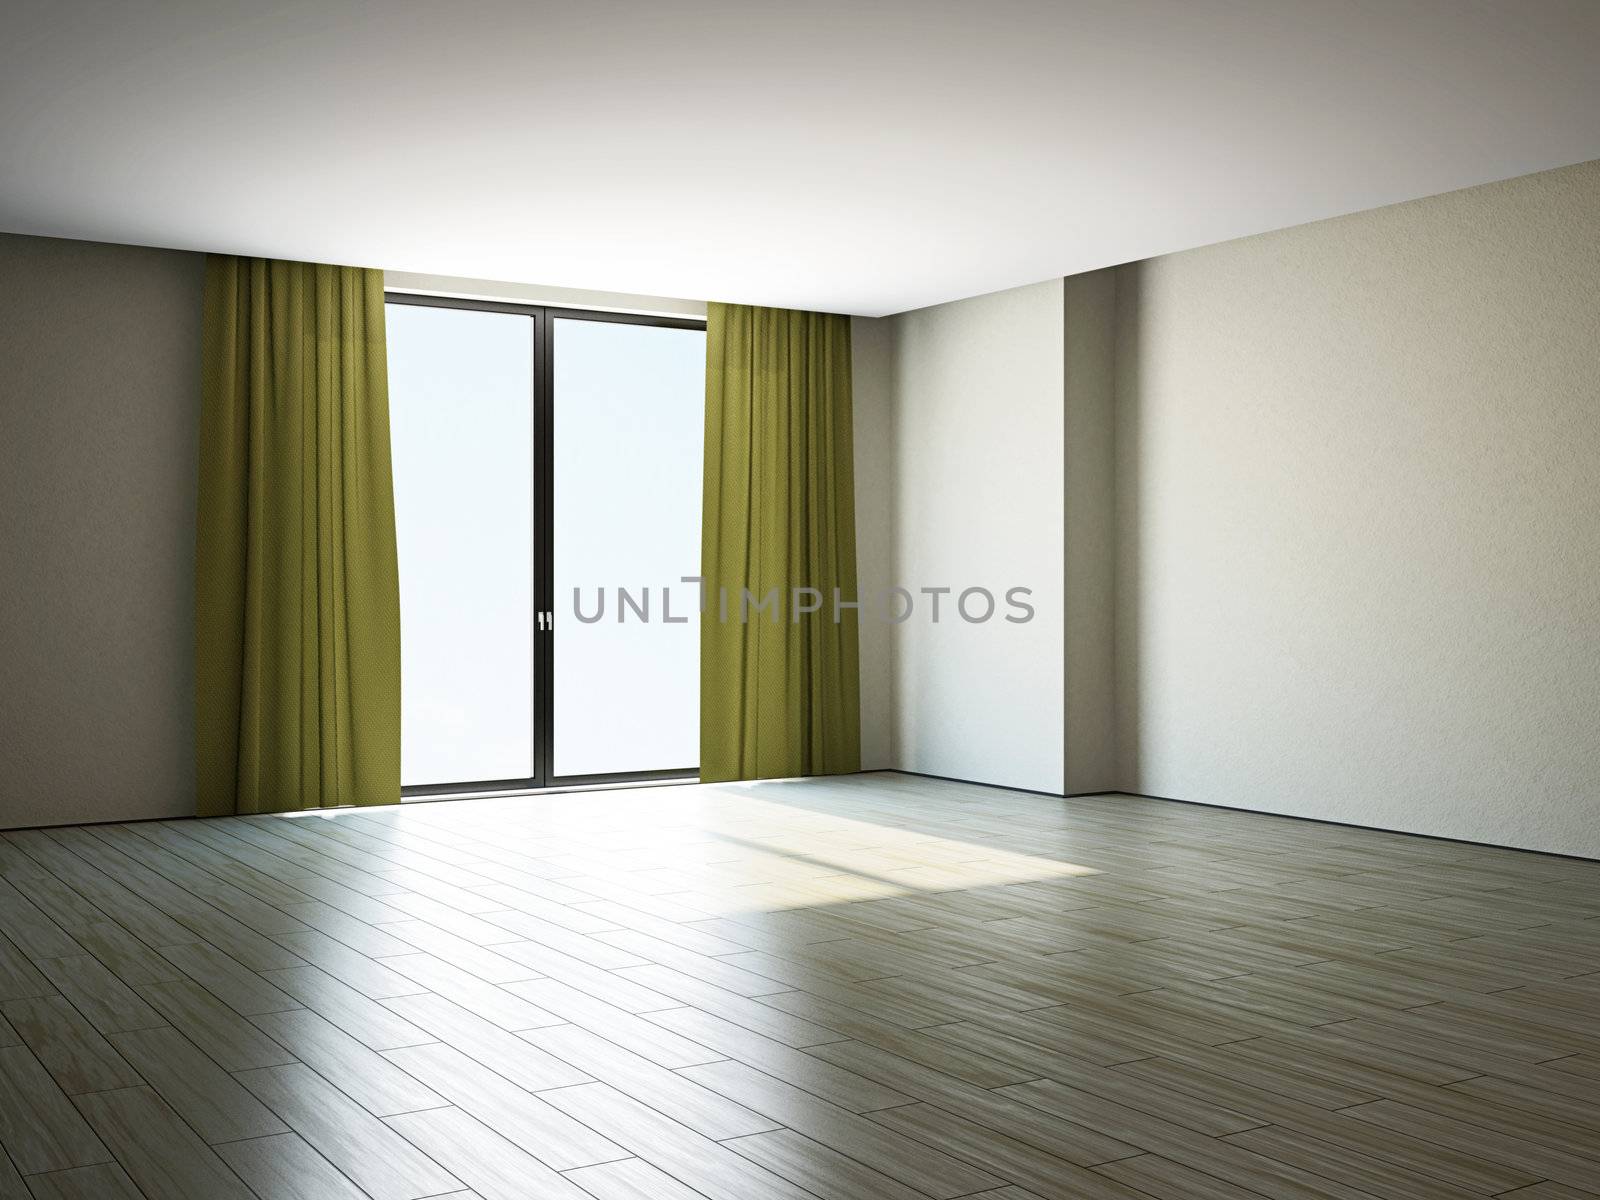 The empty room with big panoramic window